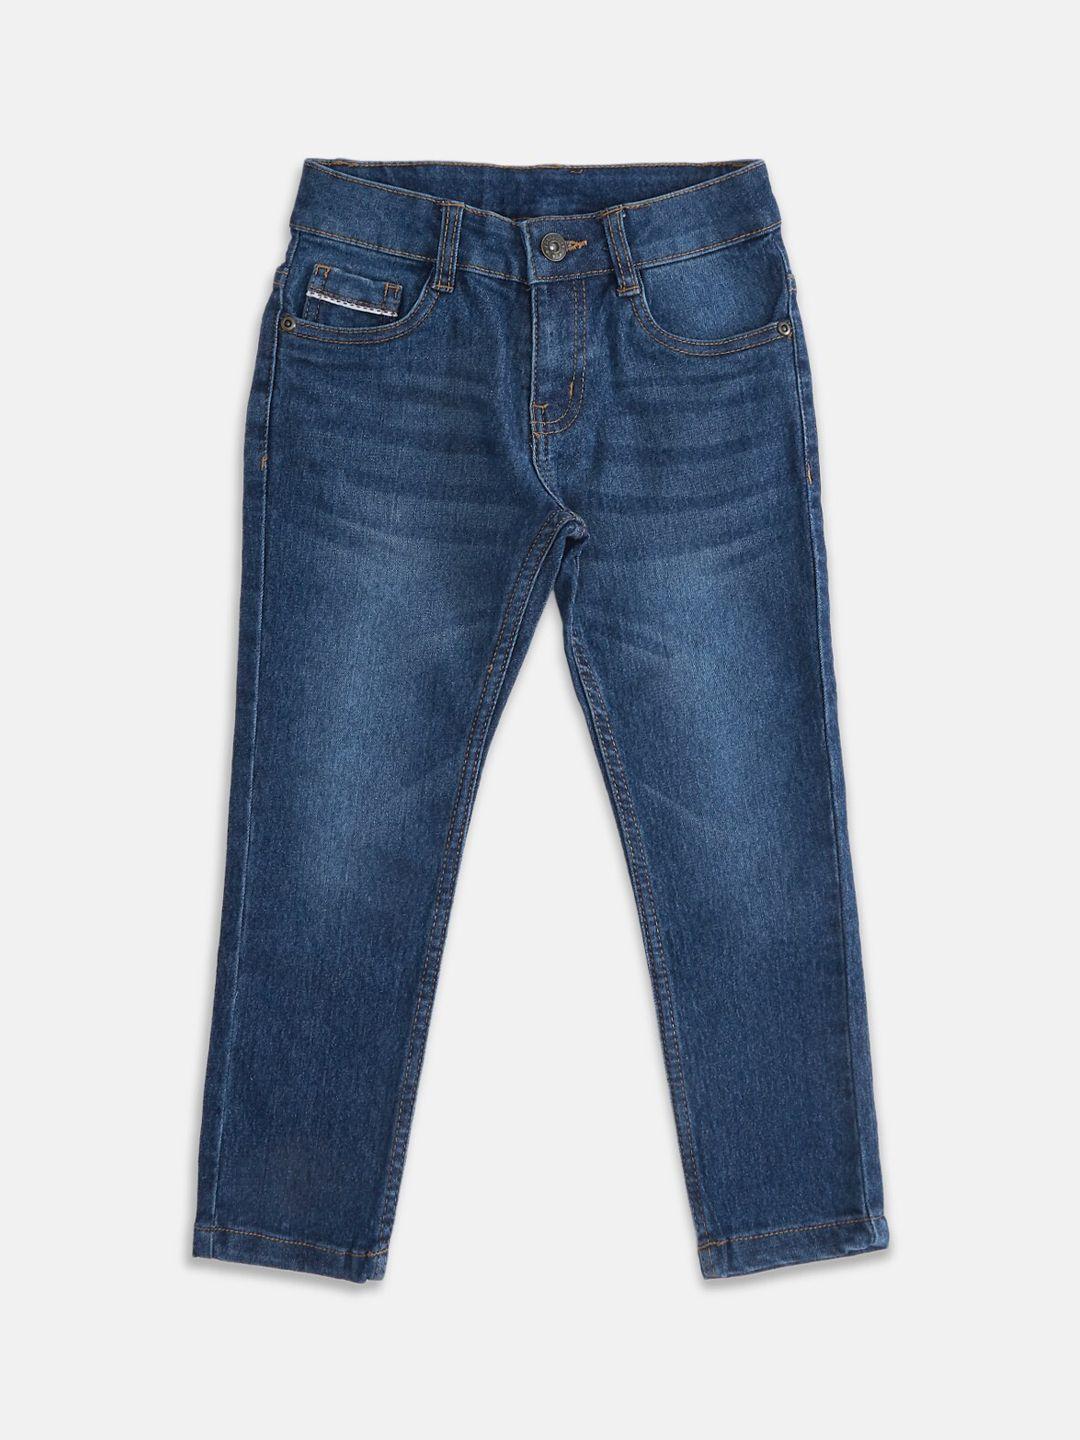 pantaloons junior boys navy blue tapered fit light fade jeans